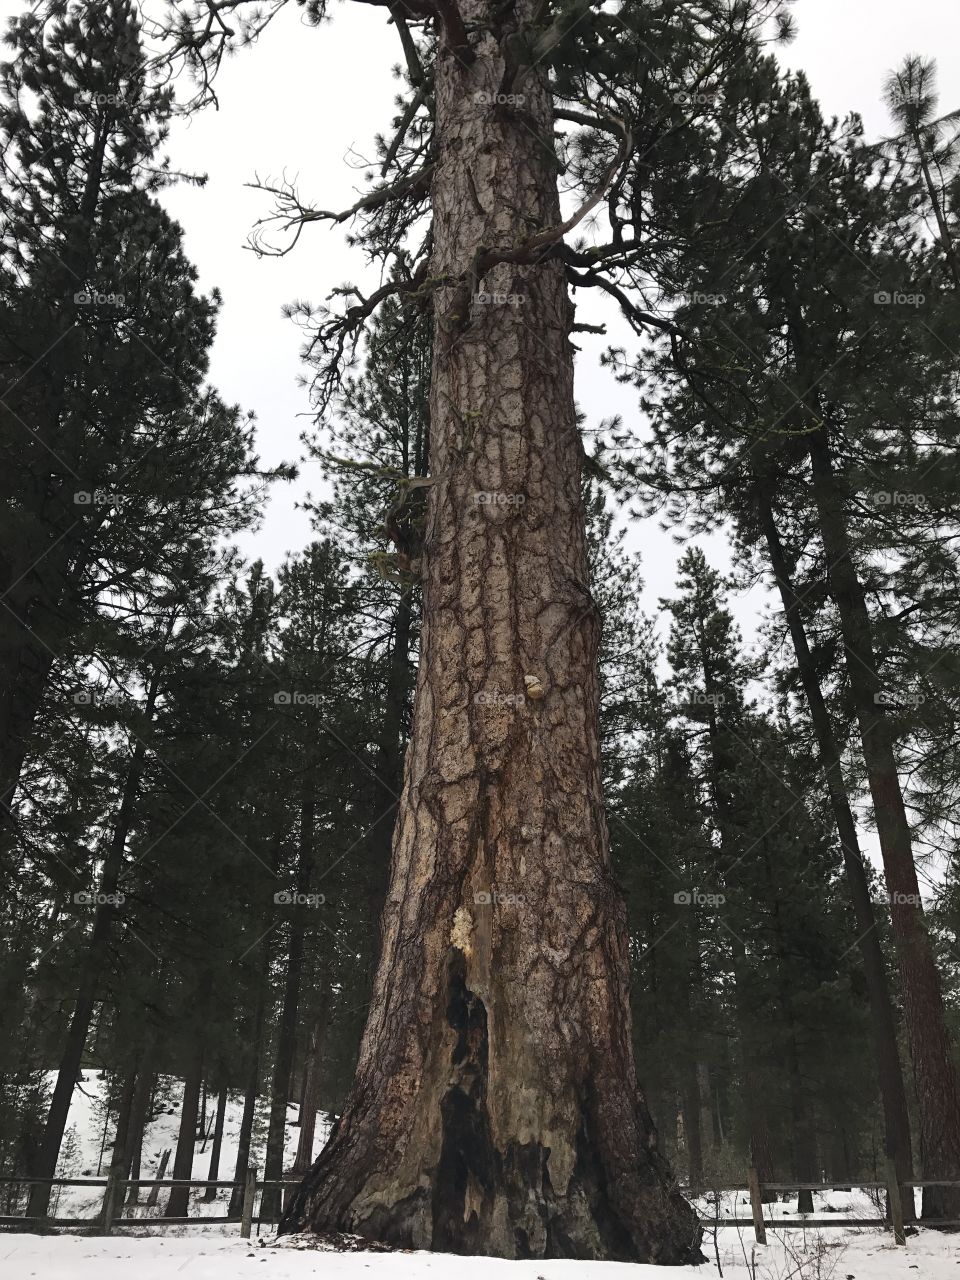 The Big Tree 